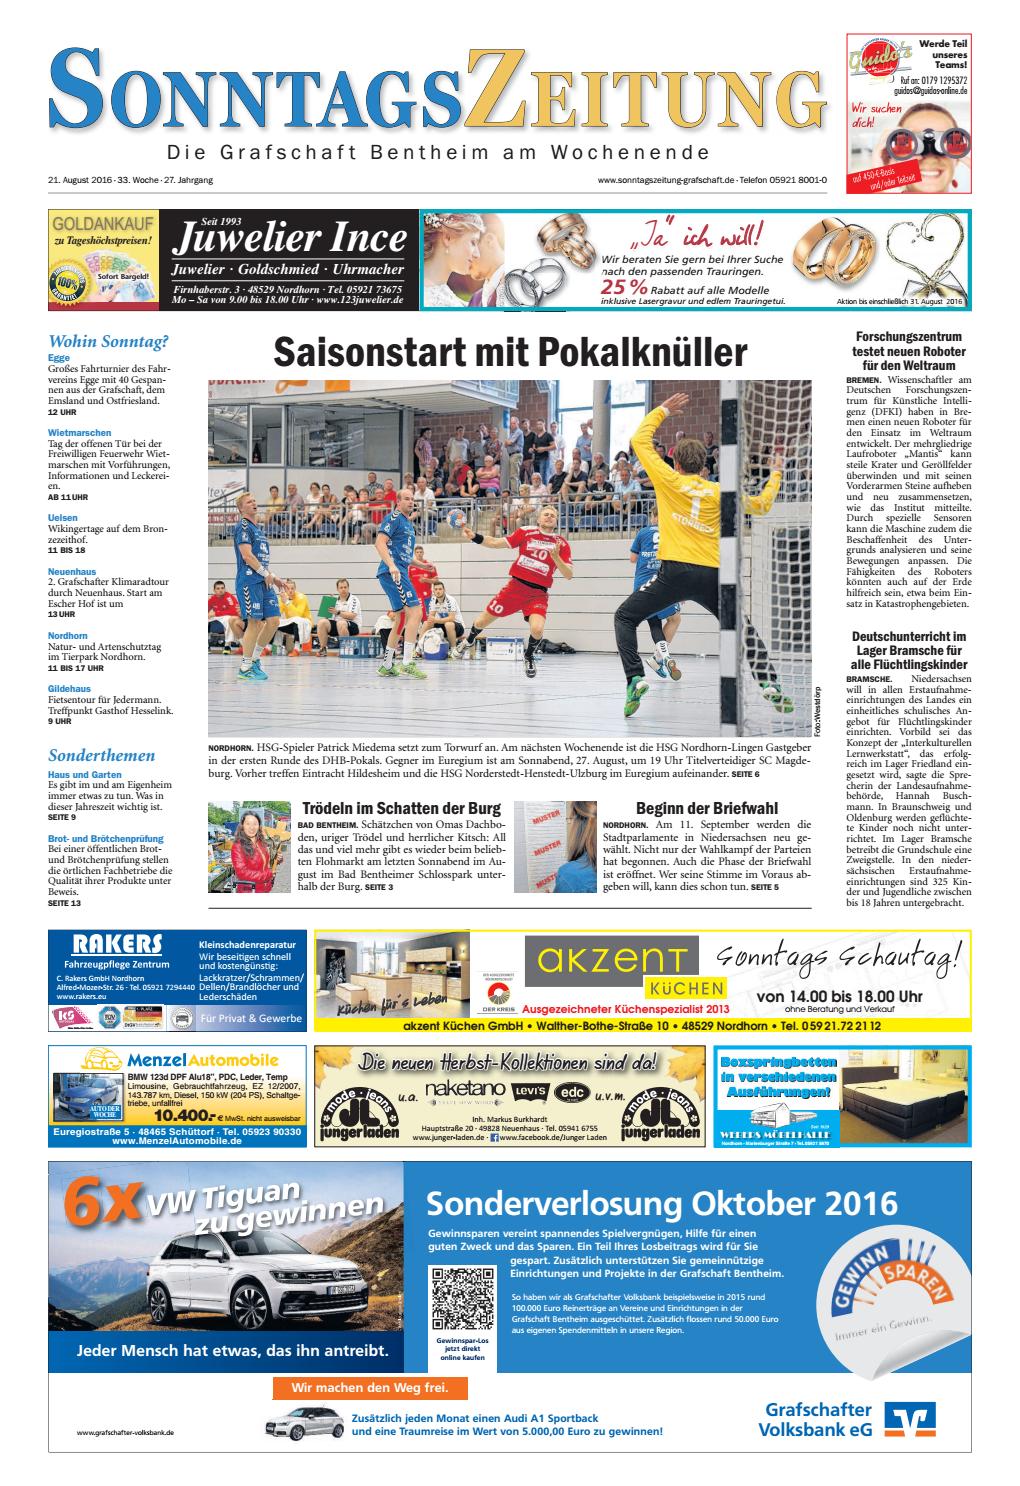 Rosenbogen Metall Aldi Inspirierend sonntagszeitung 21 08 2016 by sonntagszeitung issuu